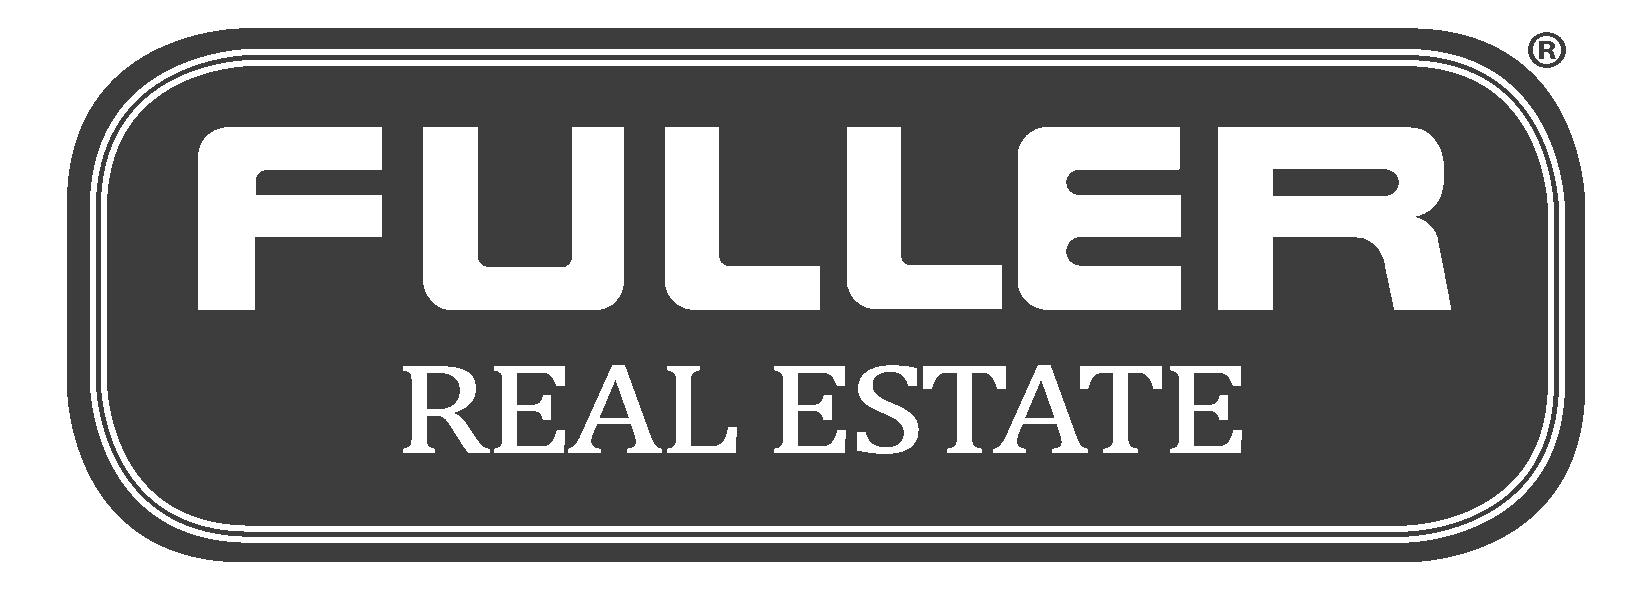 Fuller Logo - Fuller Real Estate logo - Real Estate Photography and Virtual Tours ...